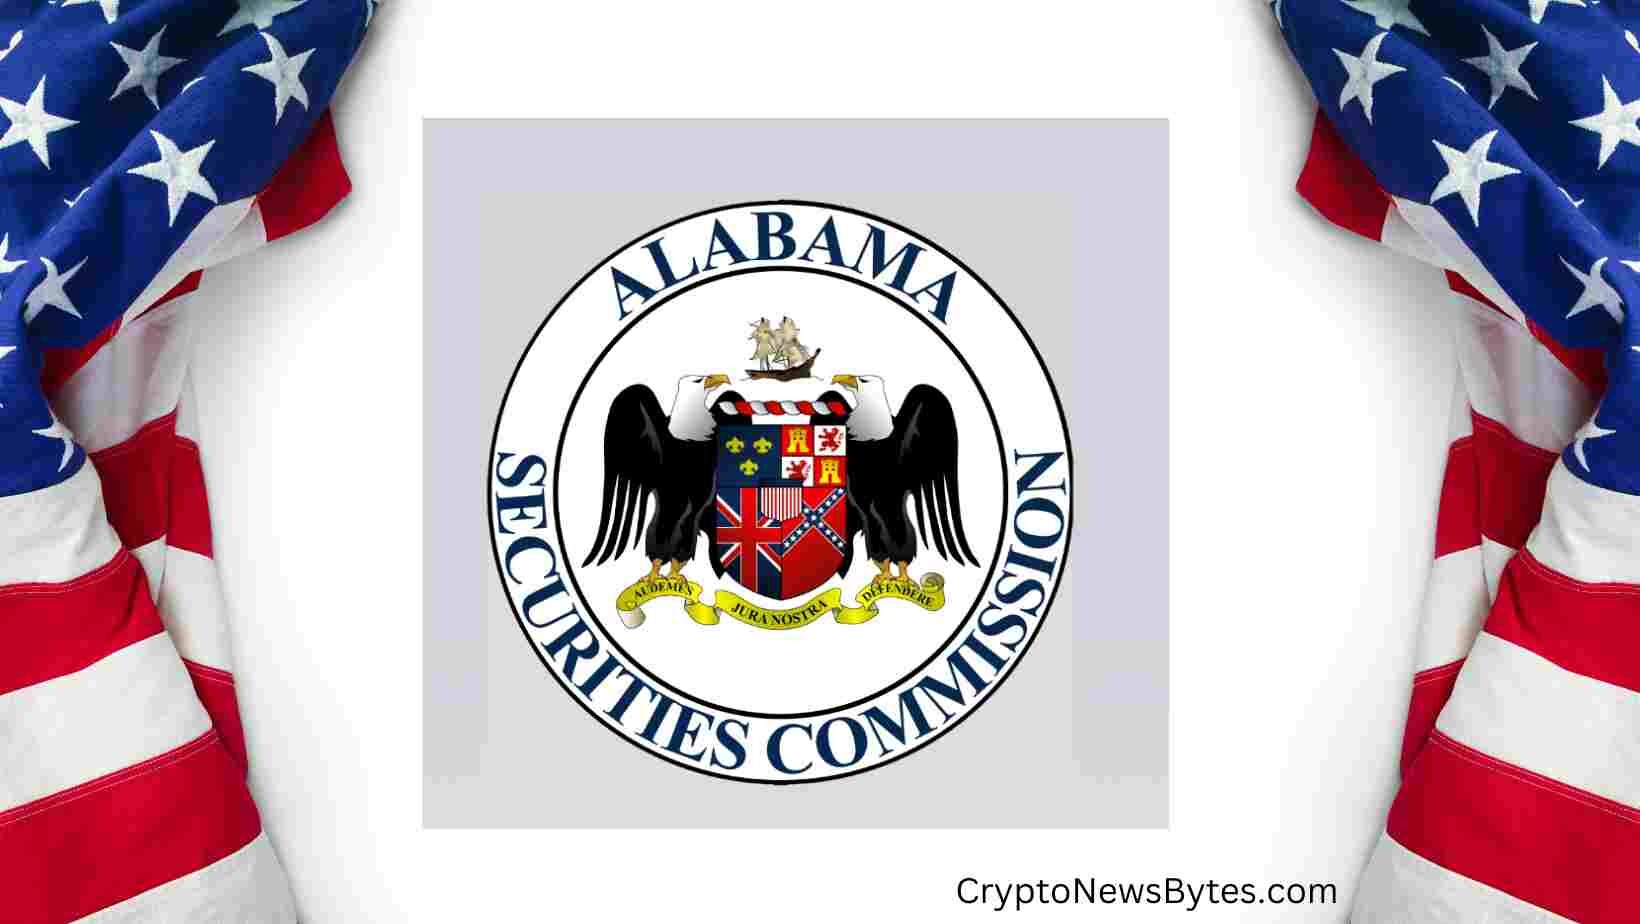 CRYPTONEWSBYTES.COM Alabama-State-Commission Alabama Securities Commission Alleged Securities Violations to Coinbase  